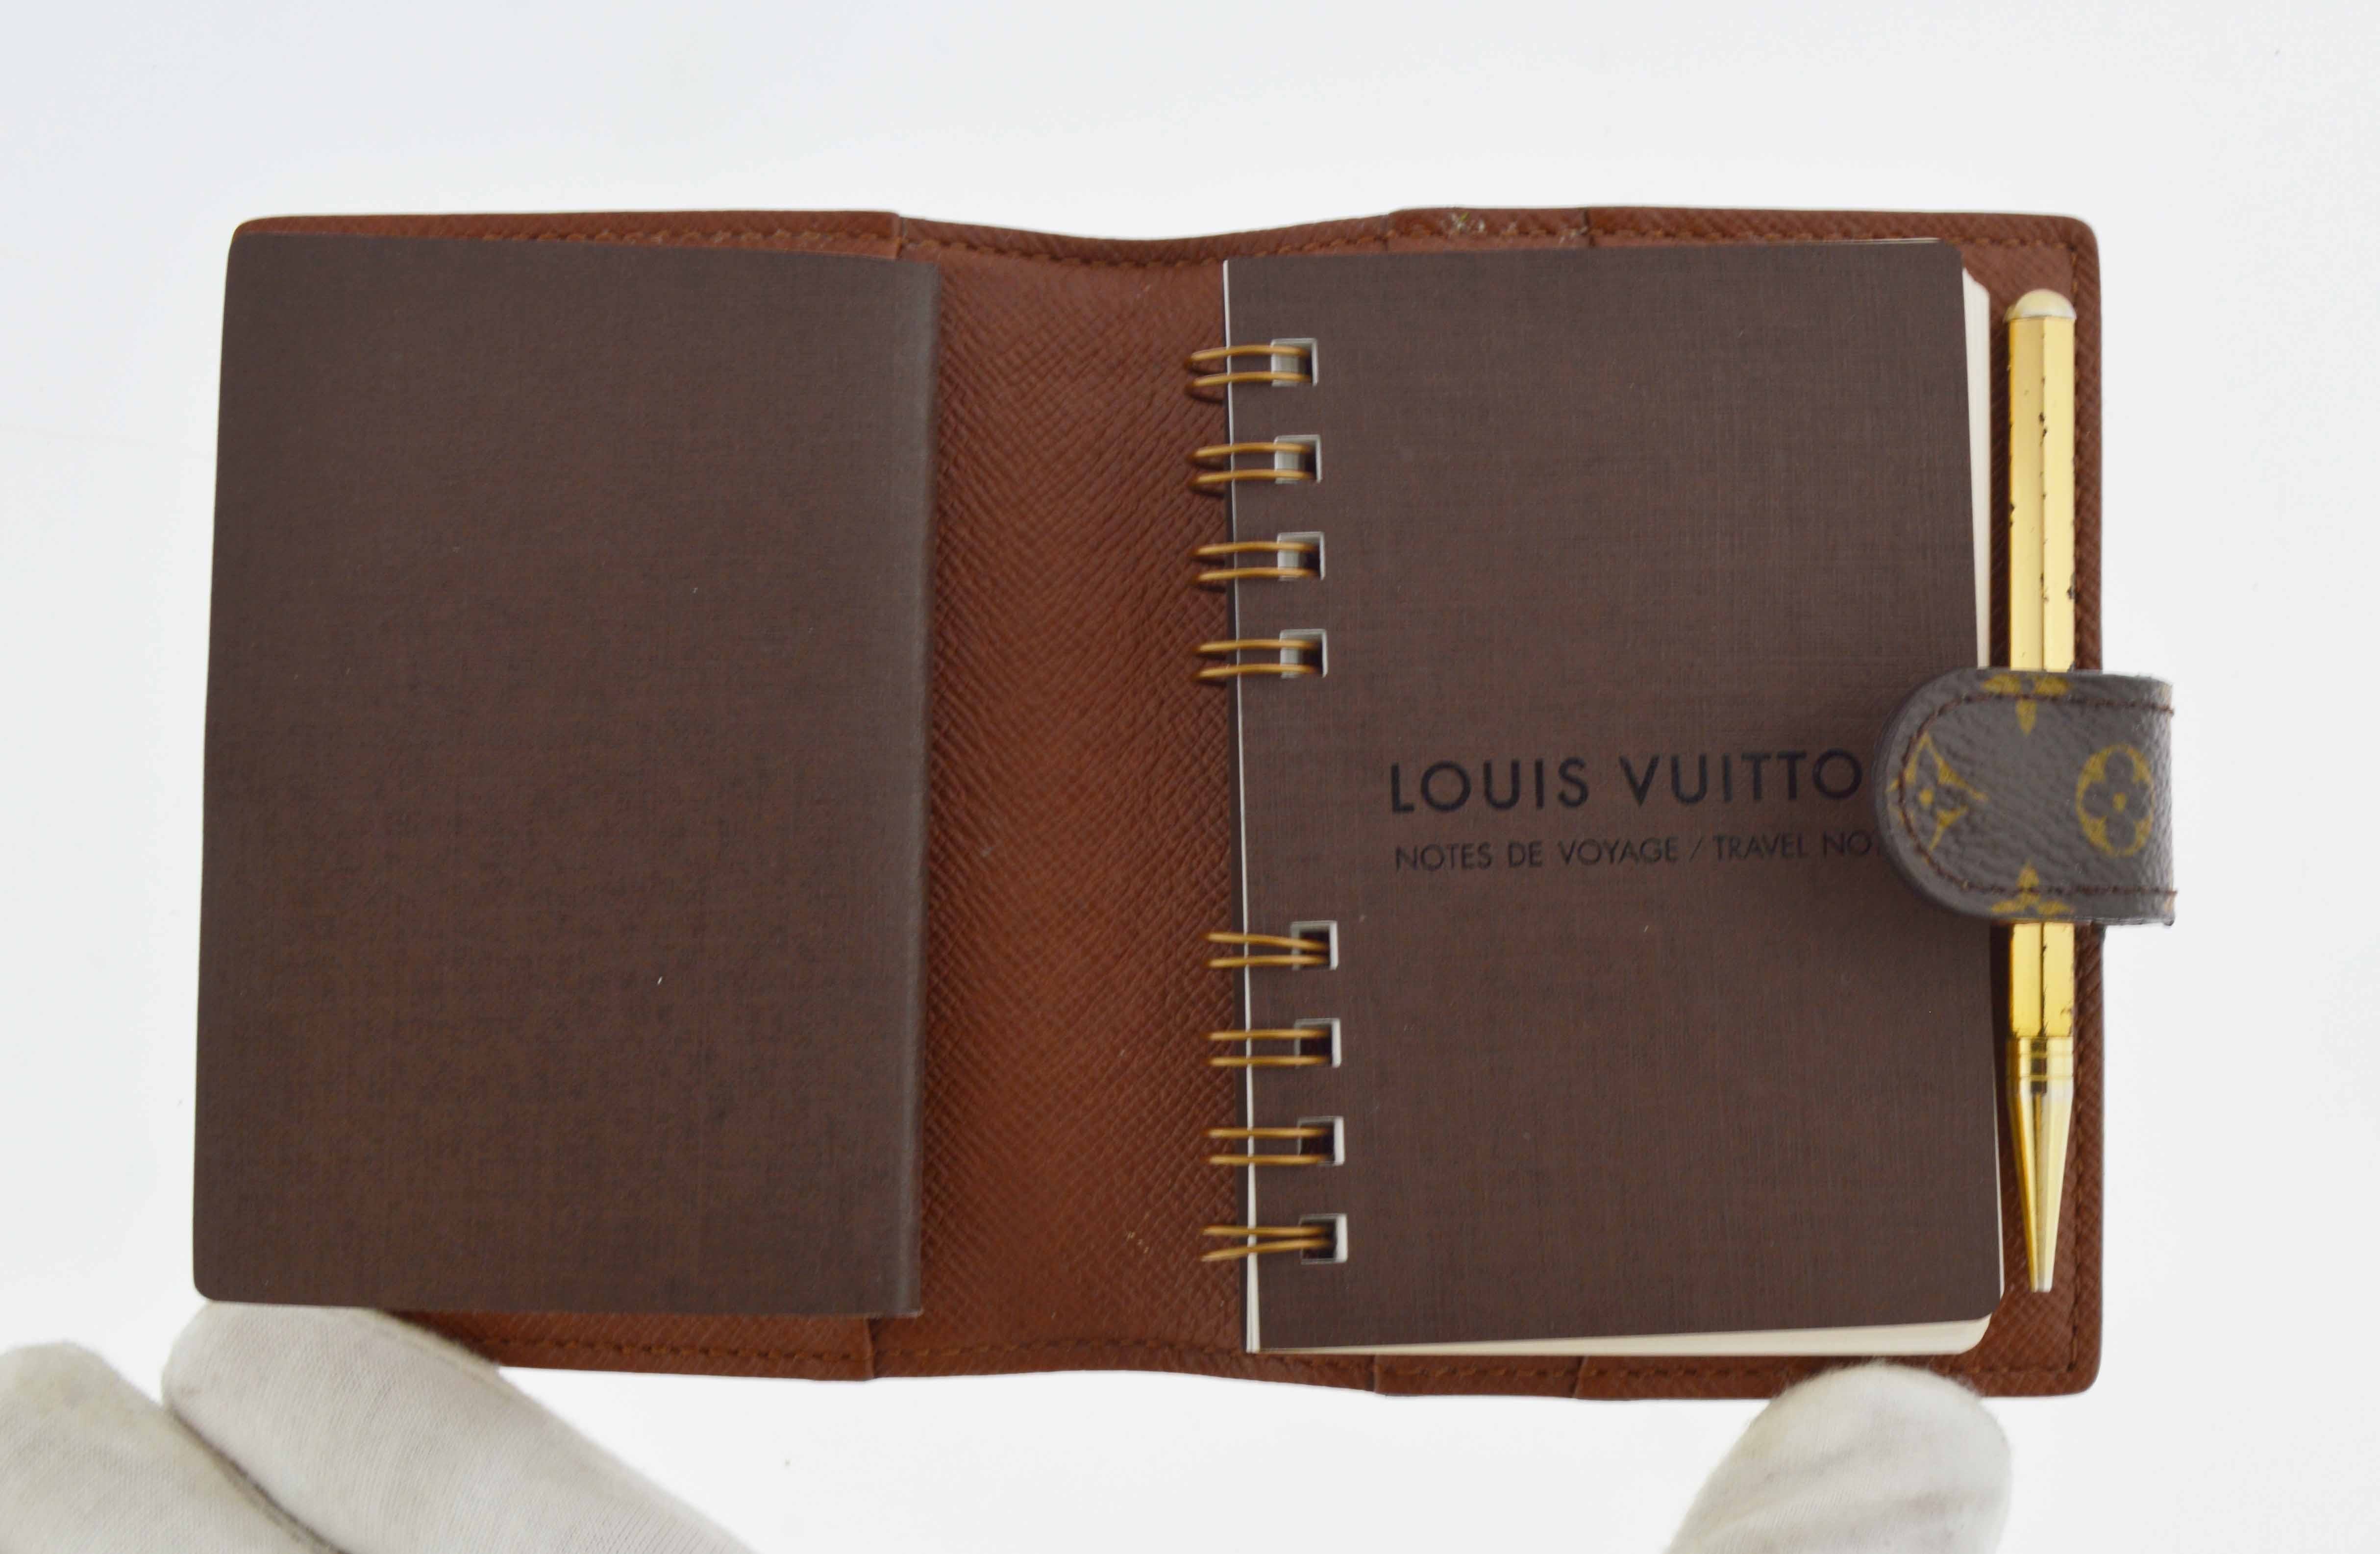 2004 150th Anniversary Louis Vuitton Paris Monogram Leather Agenda Day Planner | eBay